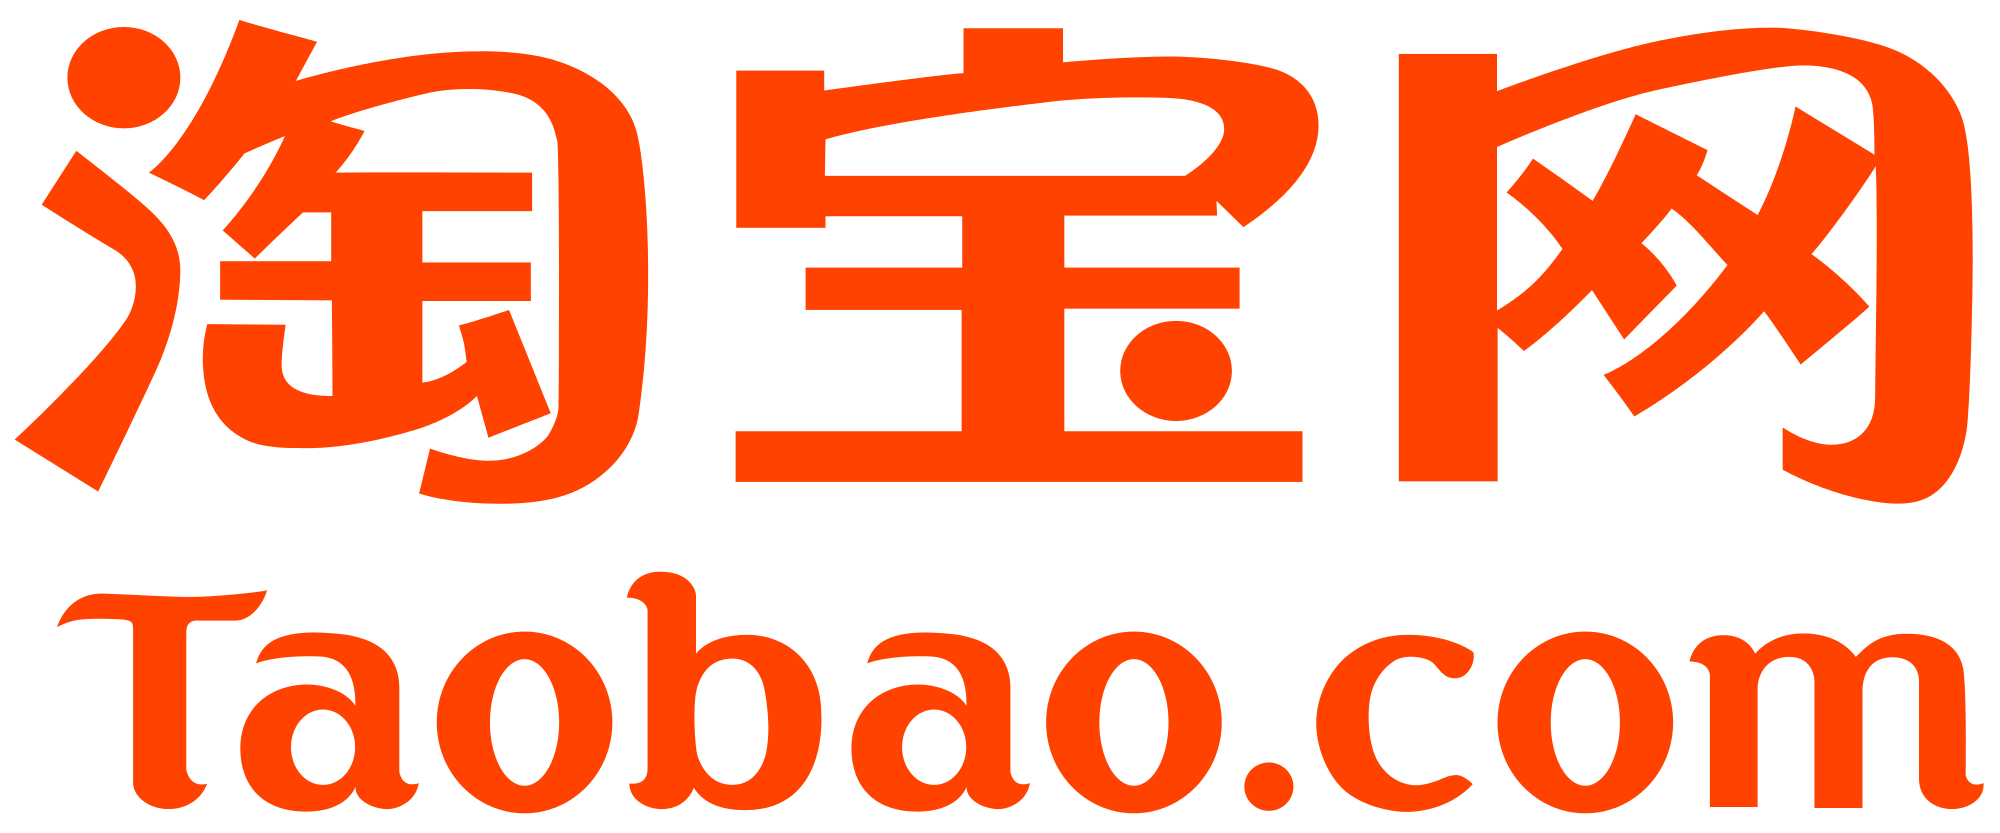 Taobao online China market lo